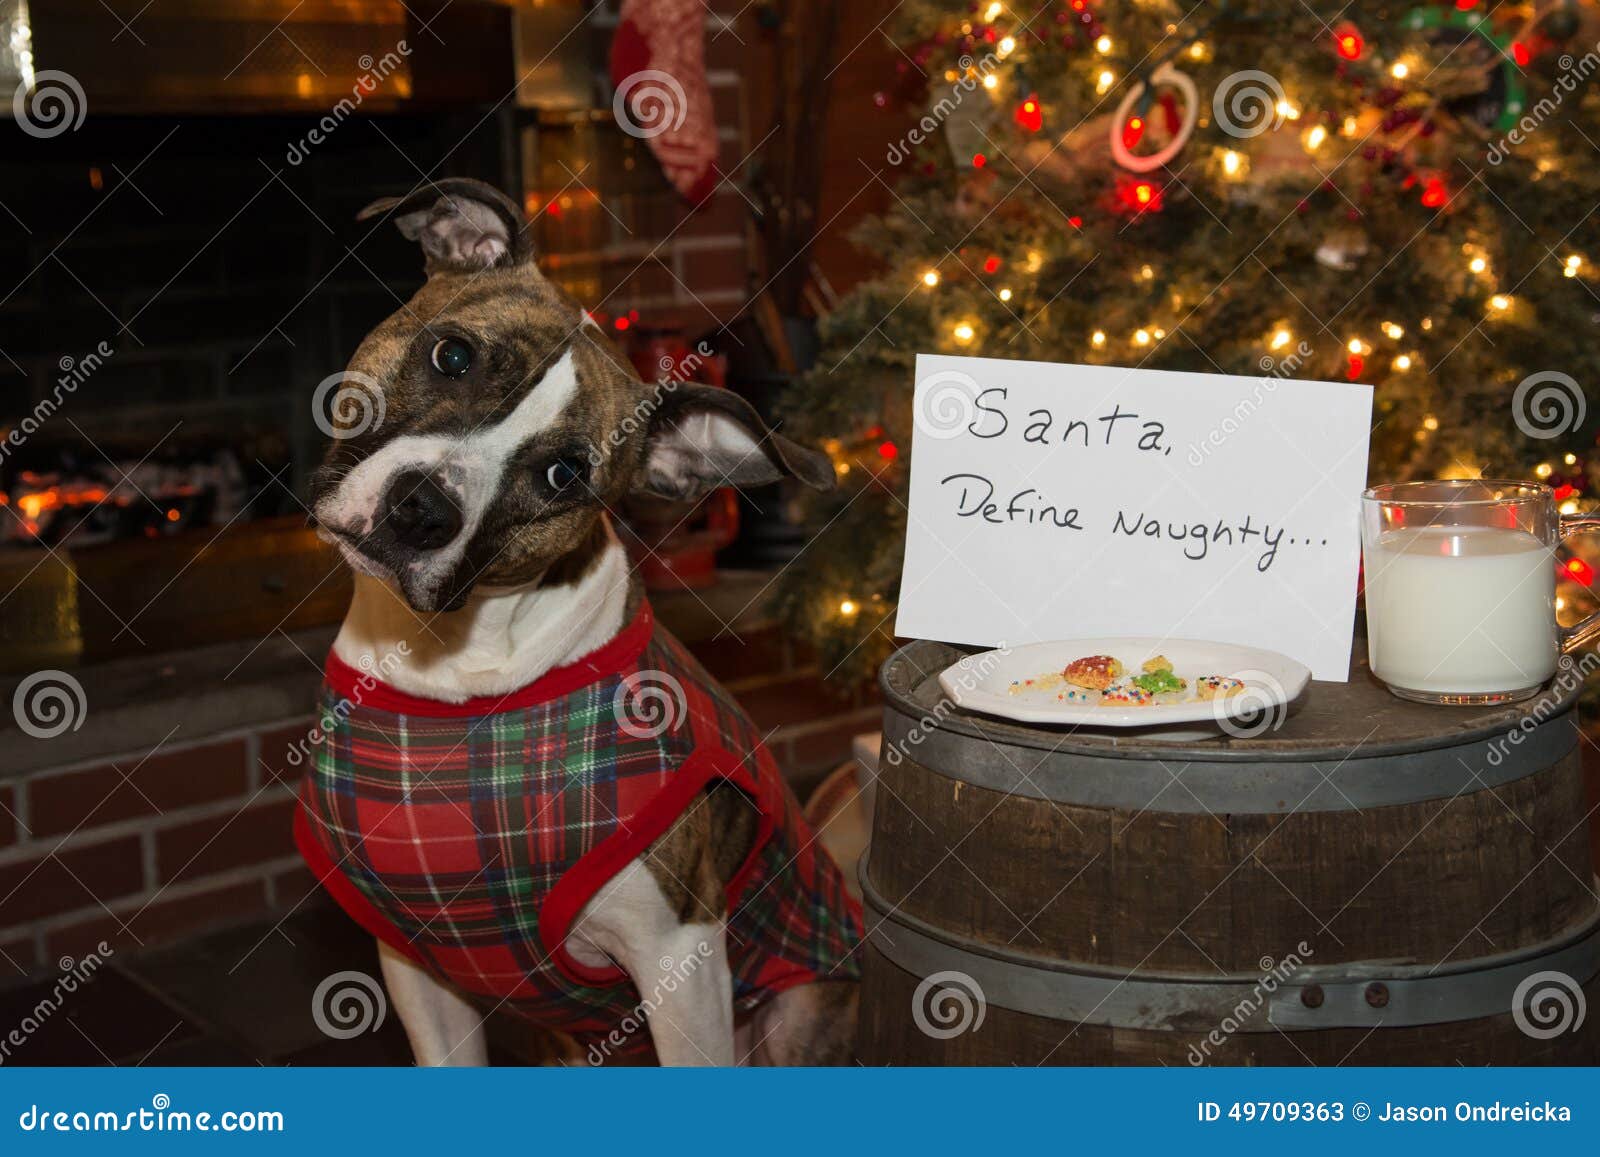 dog eats santas cookies